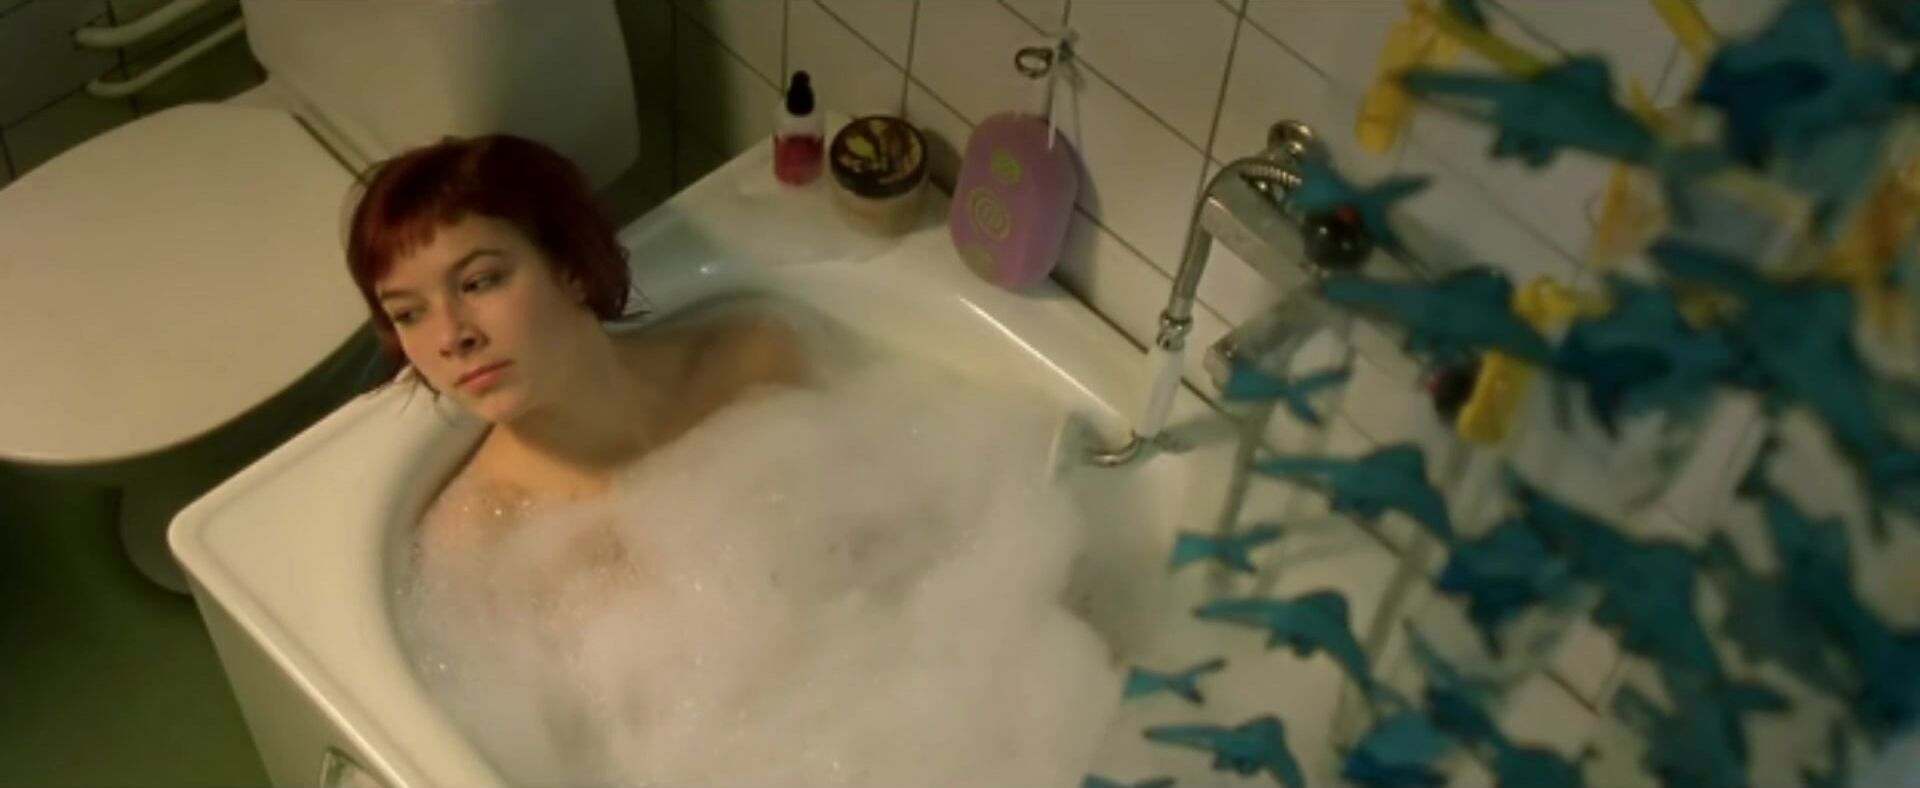 Swingers Swedish film Hannah Med H sex scene where man thrusts cock into Tove Edfeldt nude (2003) Gay Orgy